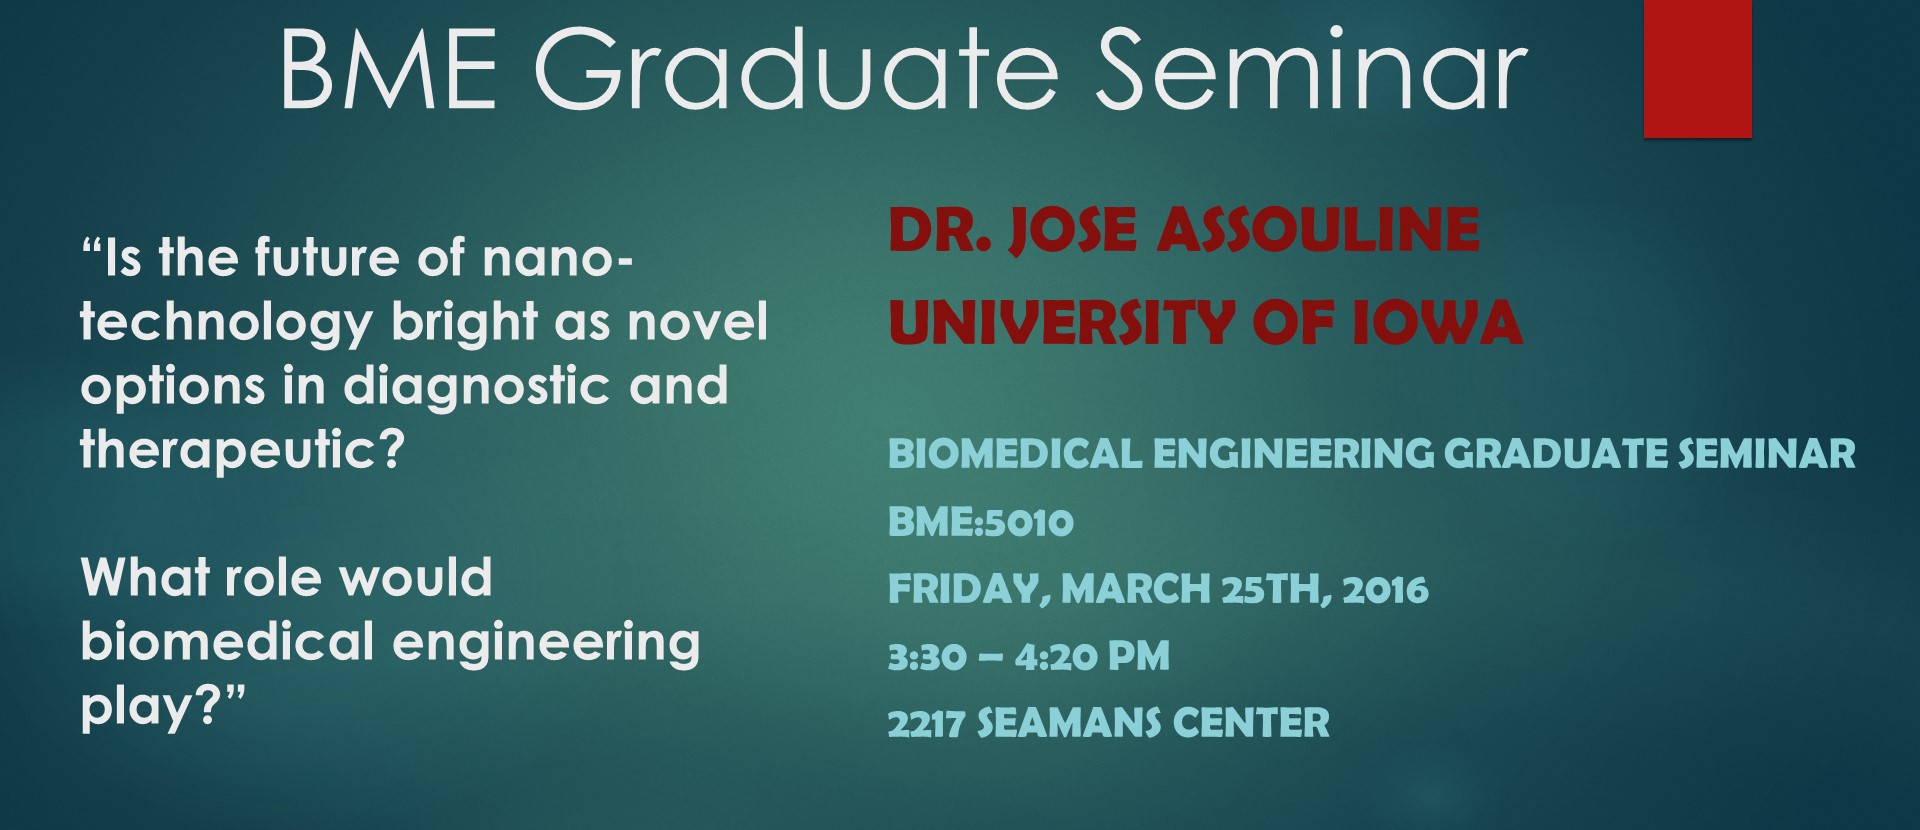 Dr. Jose Assouline presents BME Graduate Seminar, 3/25/16, 3:30 - 4:20 pm, 2217 SC